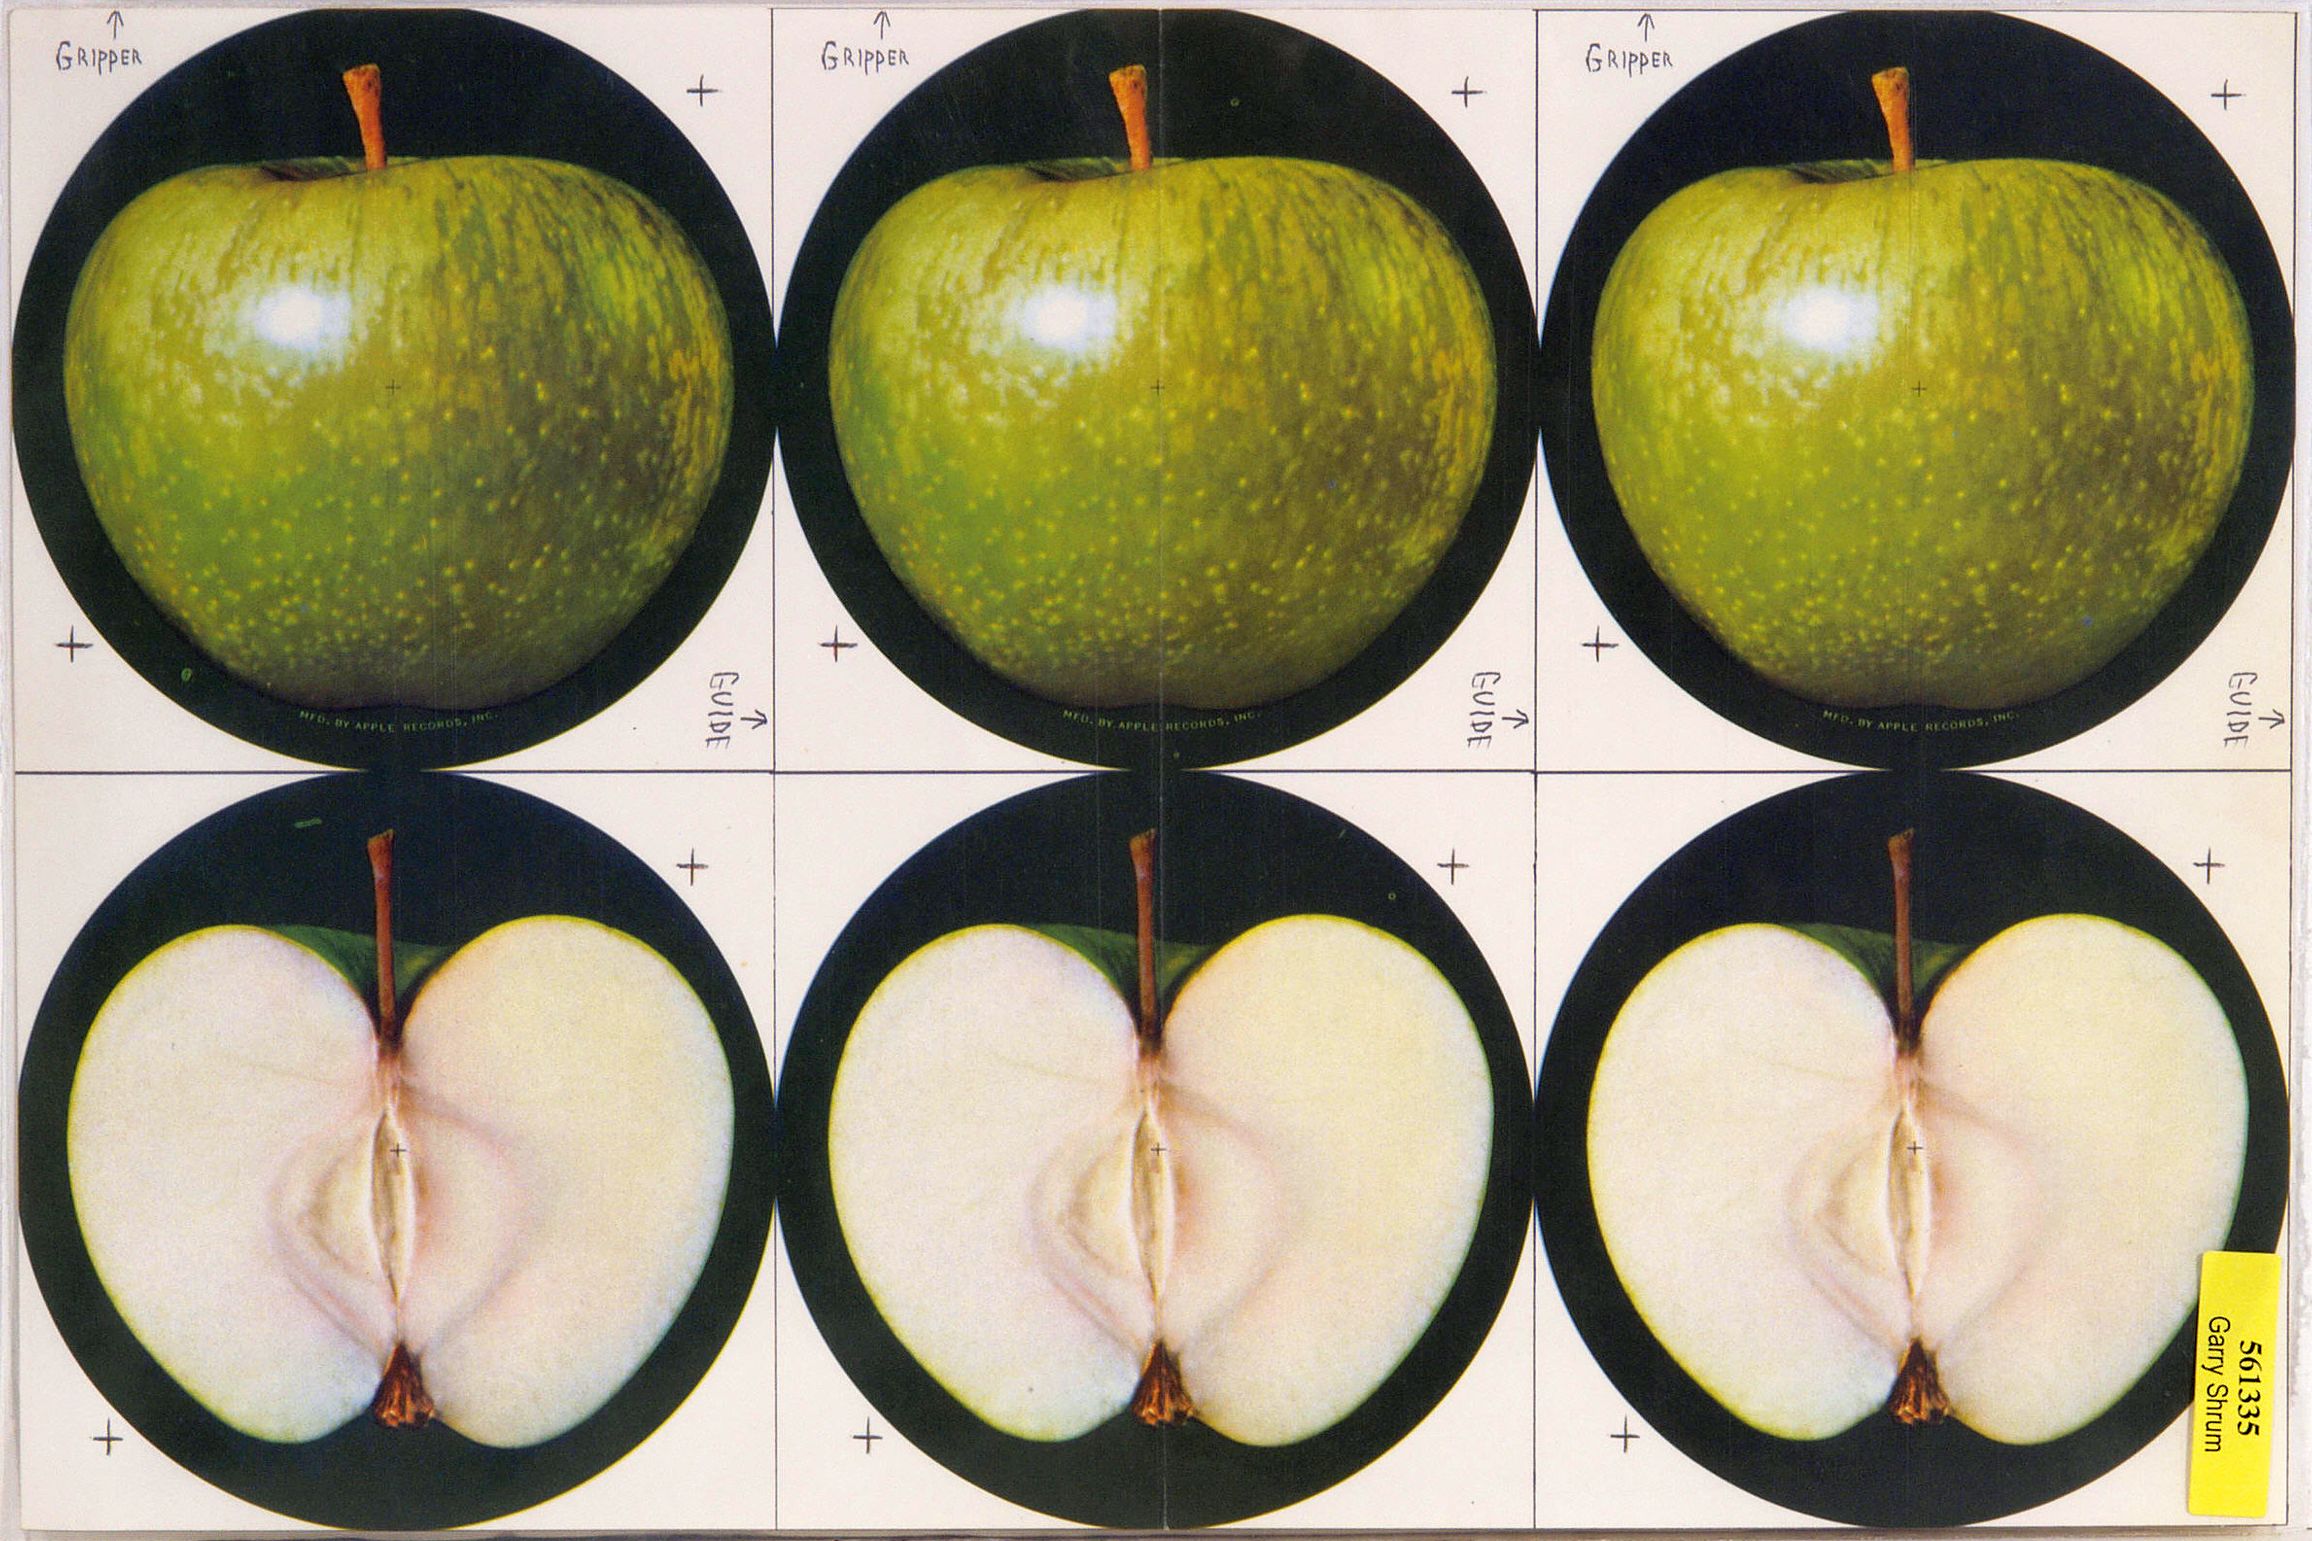 The apple am little. Яблоко Beatles. The Beatles Apple records. Логотип Битлз яблоко. Битлз яблоко на пластинках.